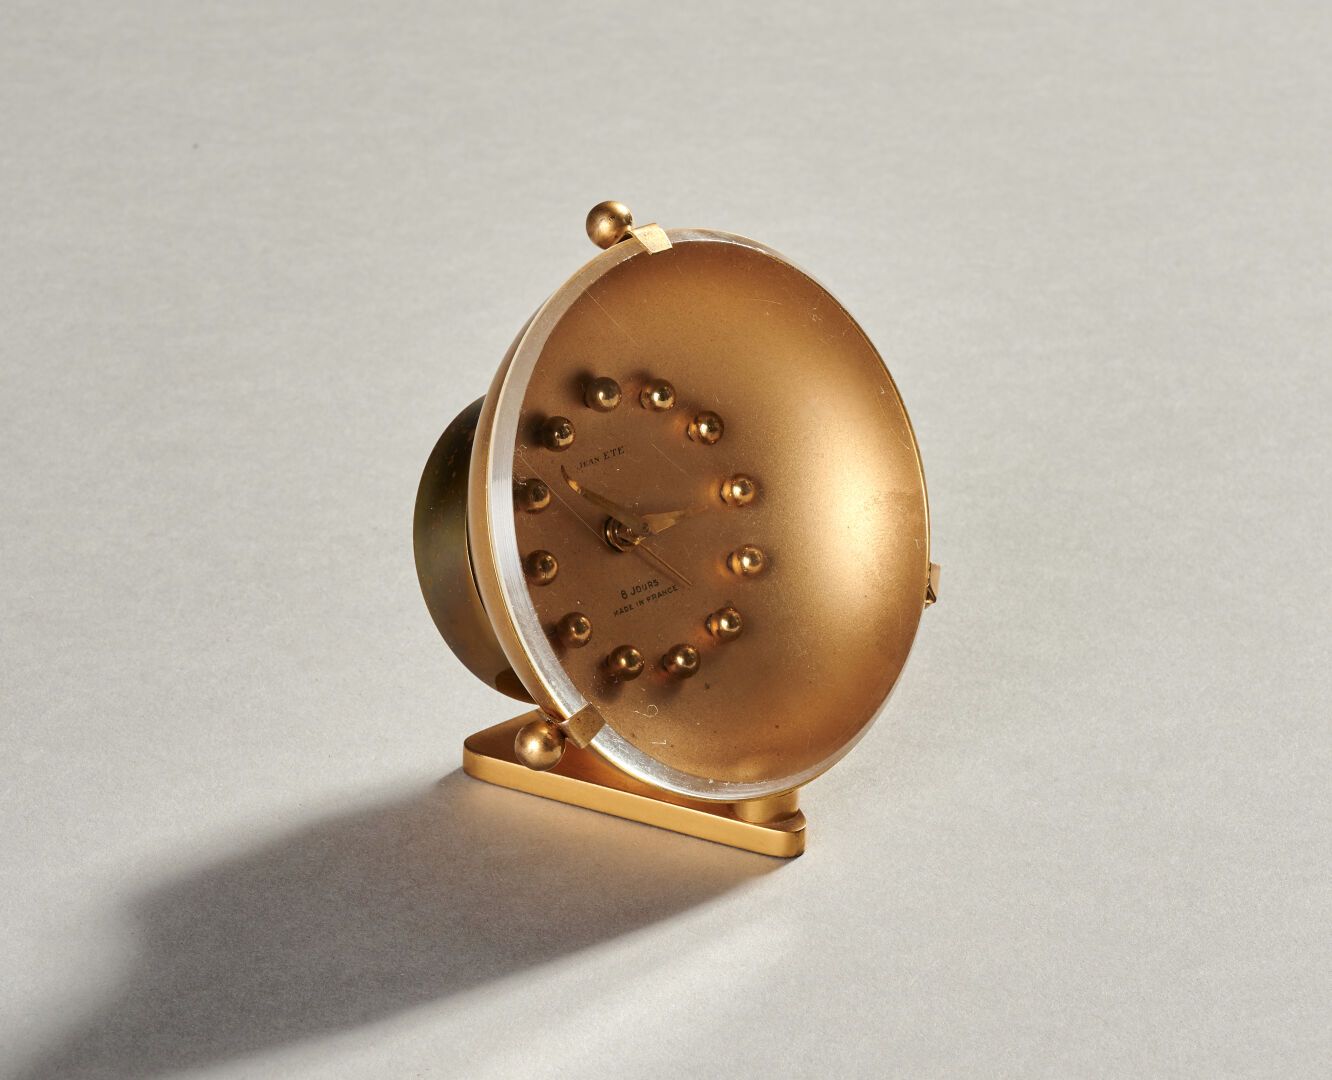 Null Jean ETE

三角形底座上的圆形铜质闹钟。金色球体表示的时间。

约1950年

10 x 9 x 6厘米（小的氧化，表面有反射板划痕，运动受阻&hellip;